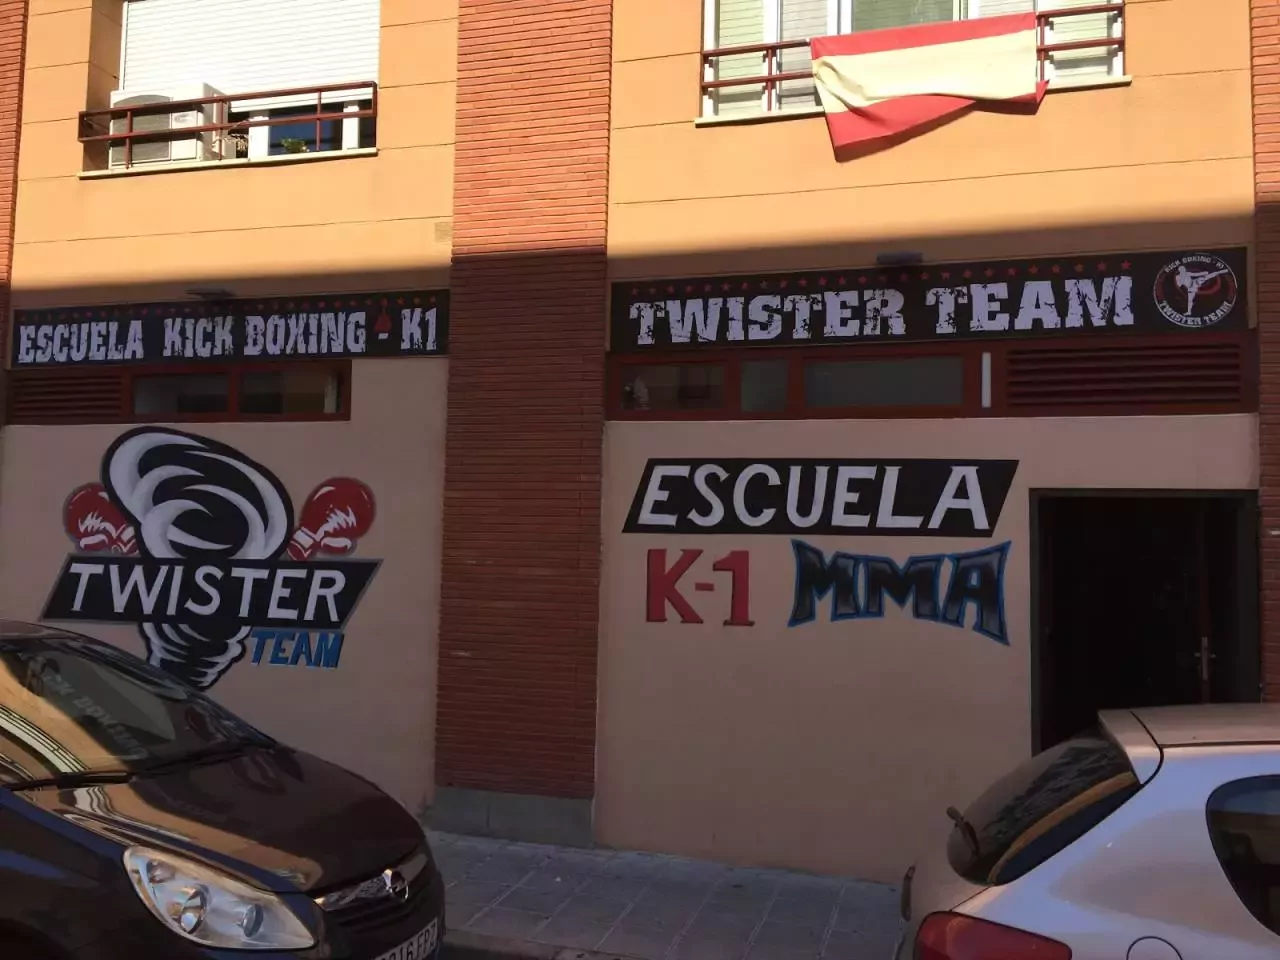 5. Escuela kick boxing Twister team k1